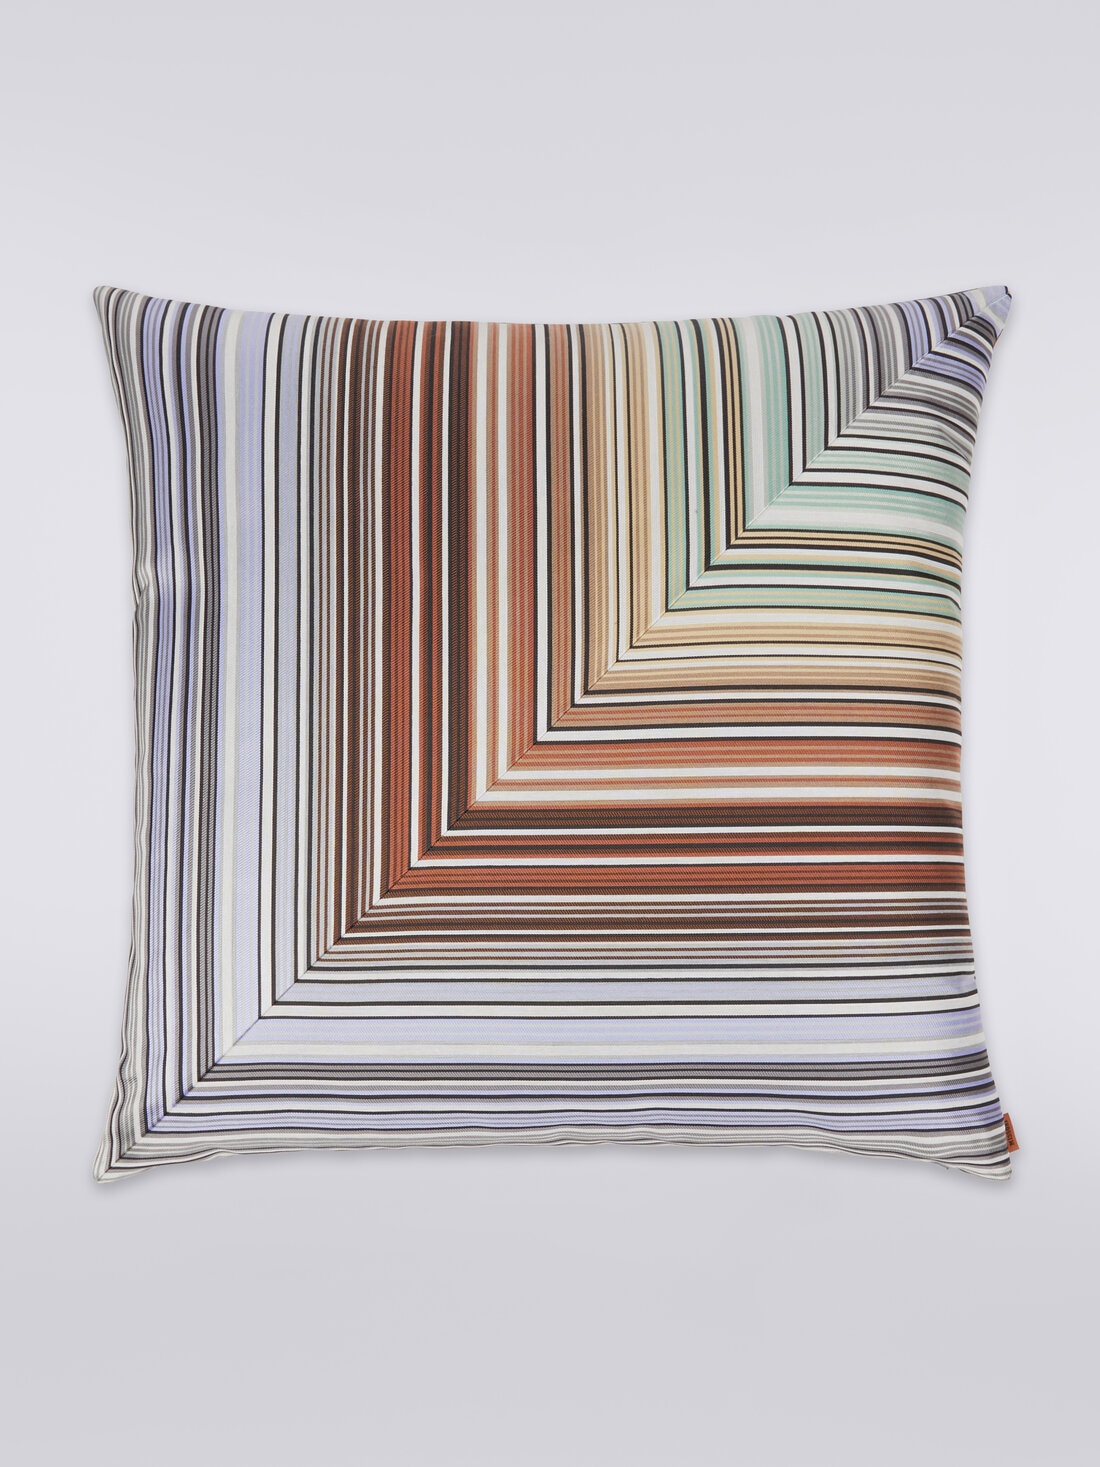 Brighton cushion 60x60 cm, Multicoloured  - 8051275607472 - 0